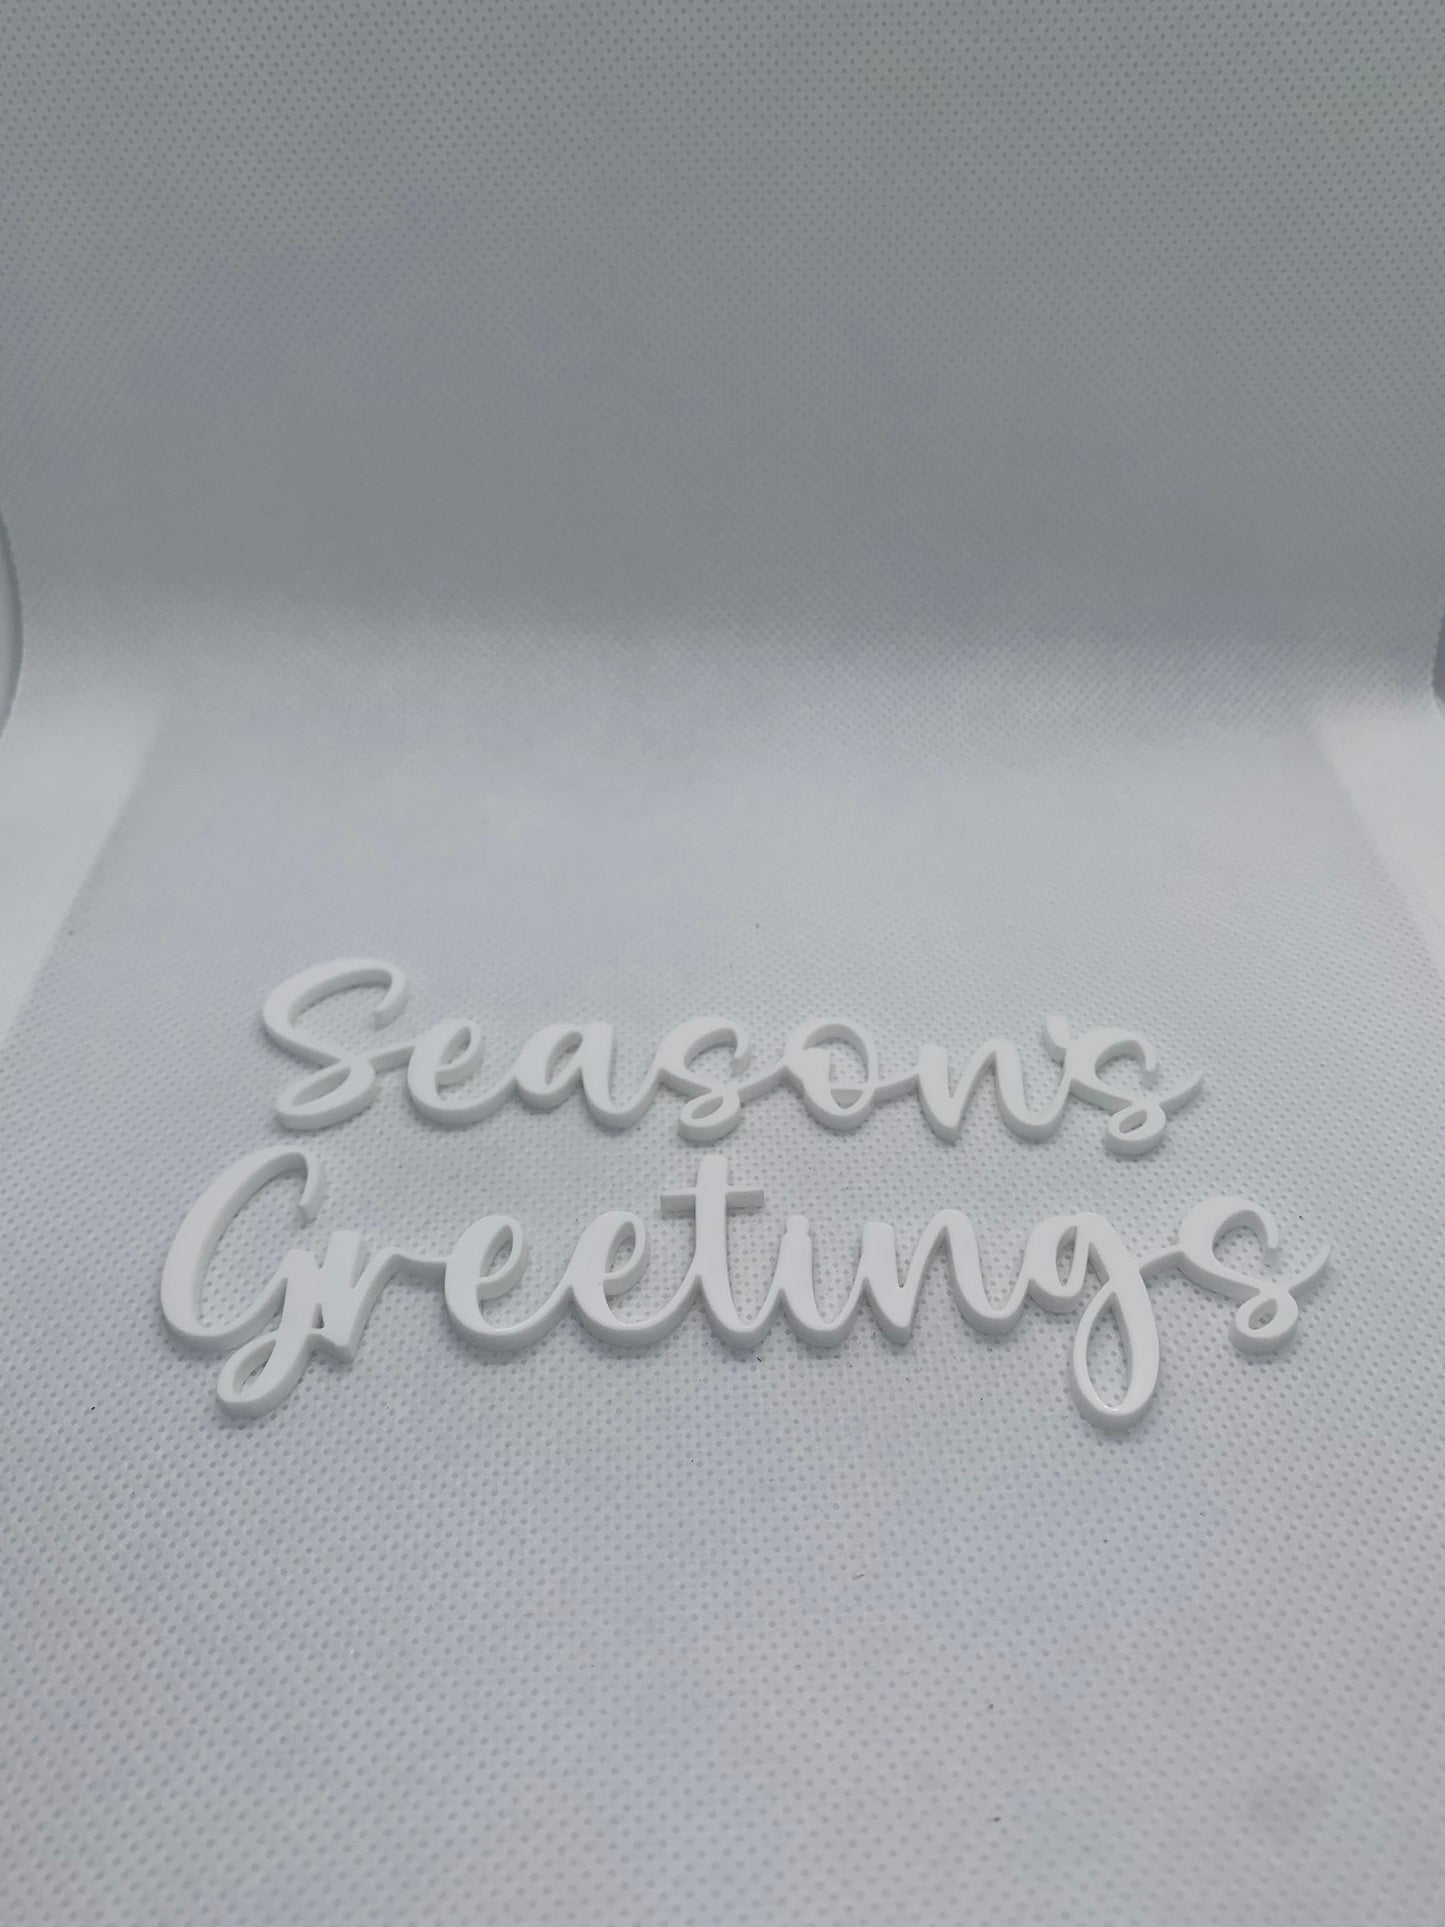 Season's Greetings - Creative Designs By Kari